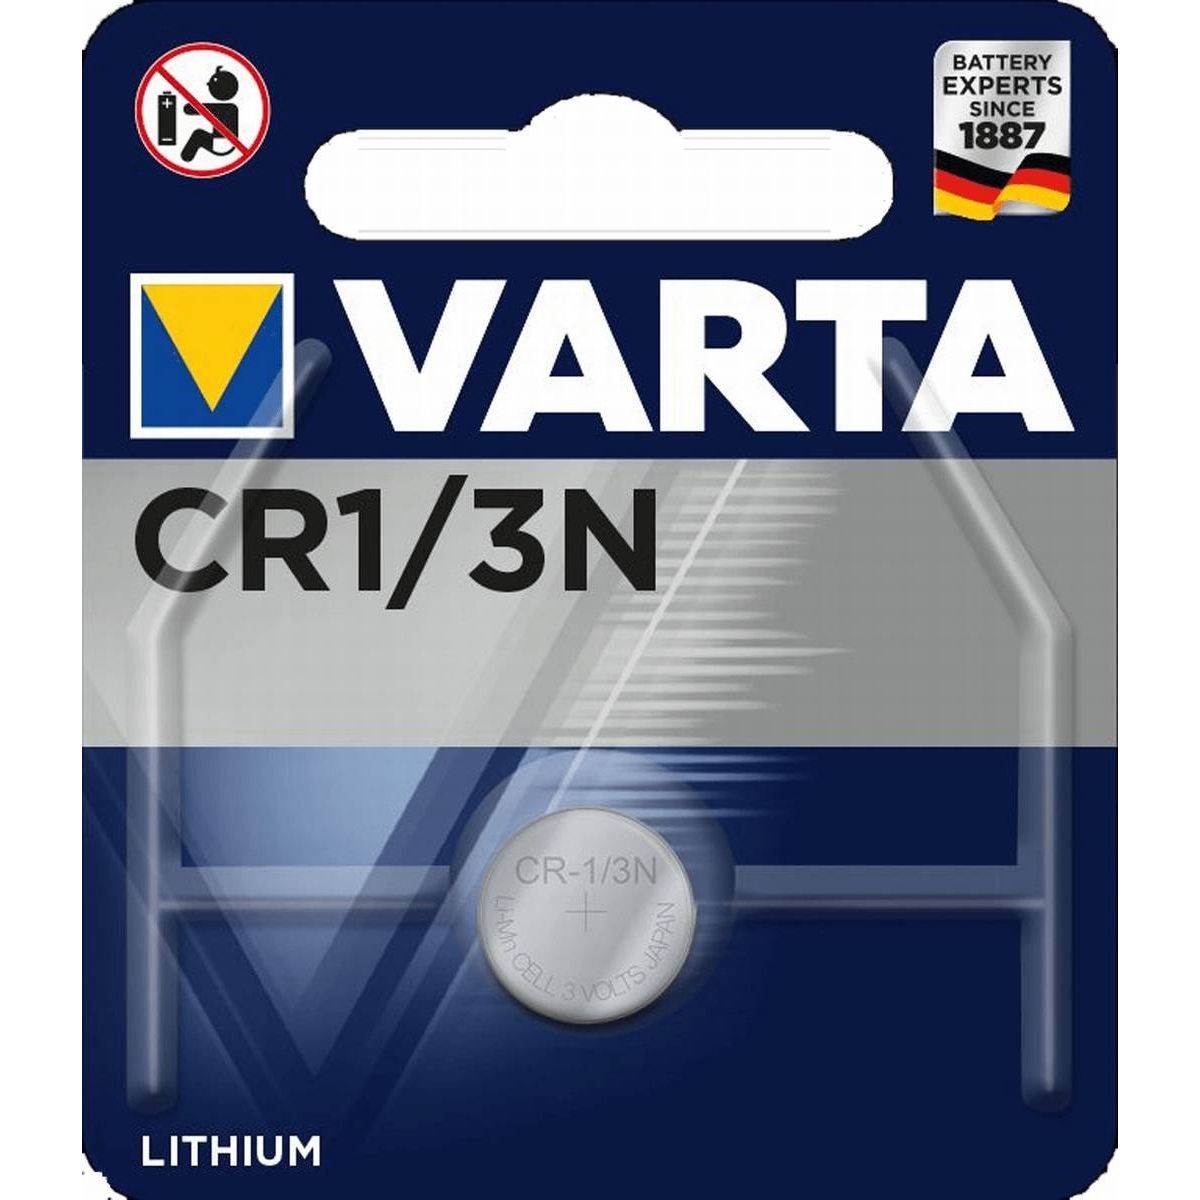 Pila Varta Cr13n 3 photo de litio electronics paquete 1 unidad en original 3v 06131101401